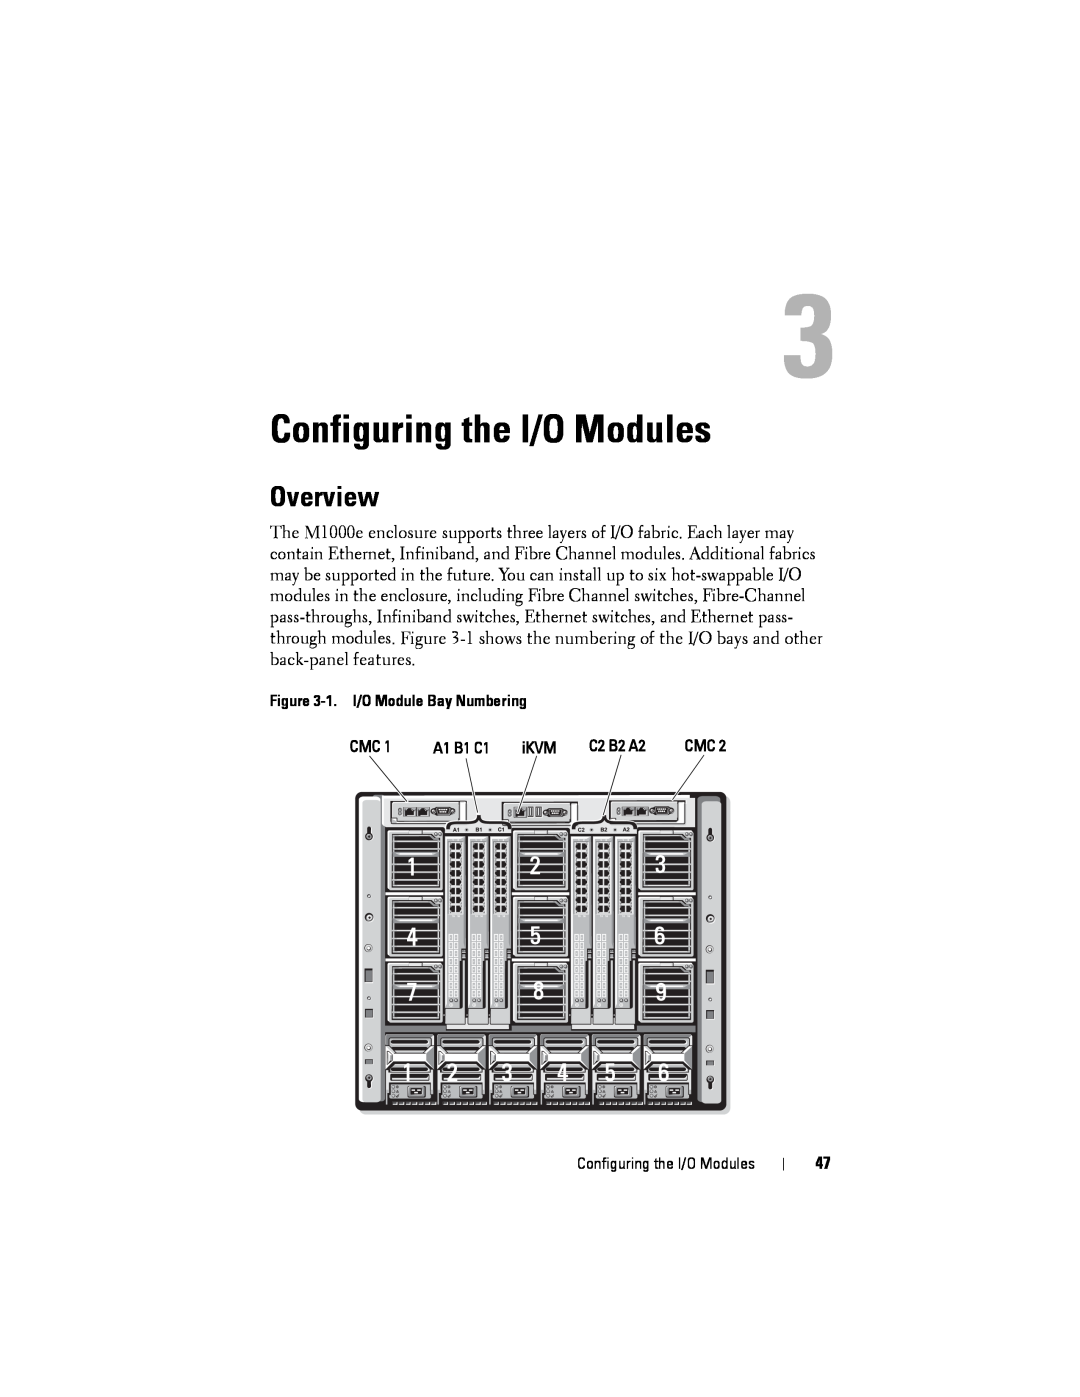 Dell M1000E manual Configuring the I/O Modules, Overview 